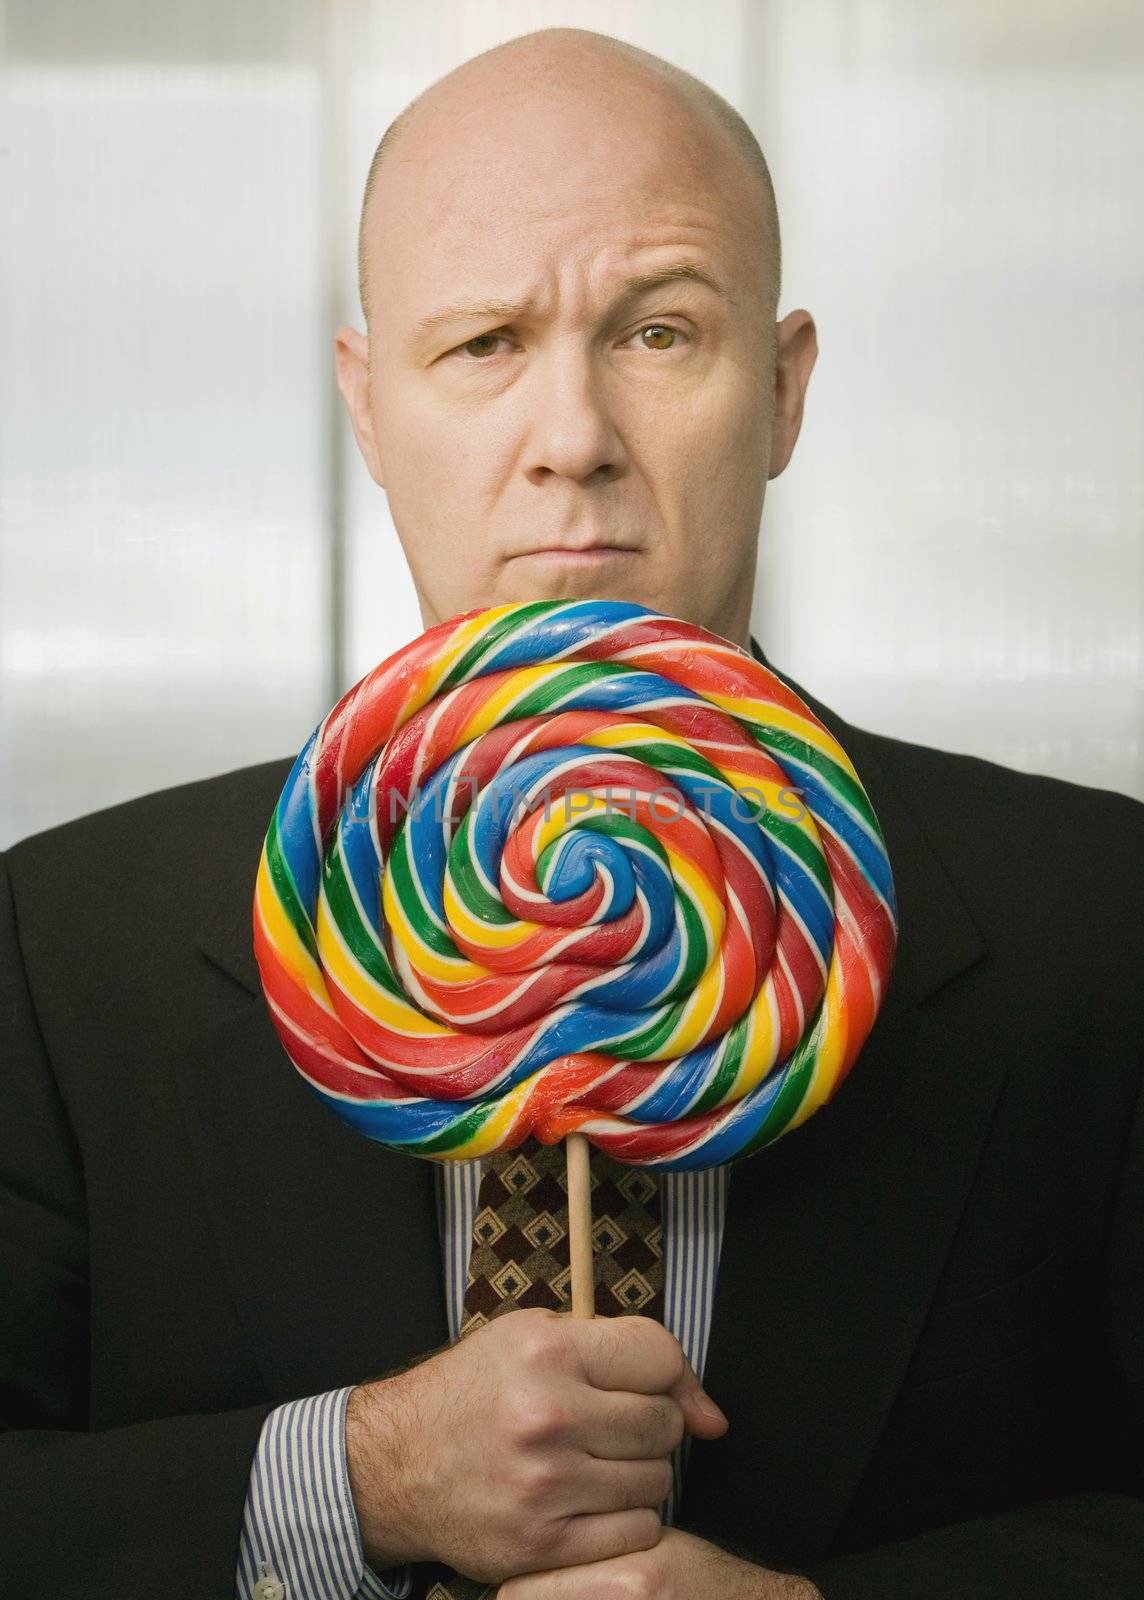 Businessman portrait with a brightly colered big lollipop